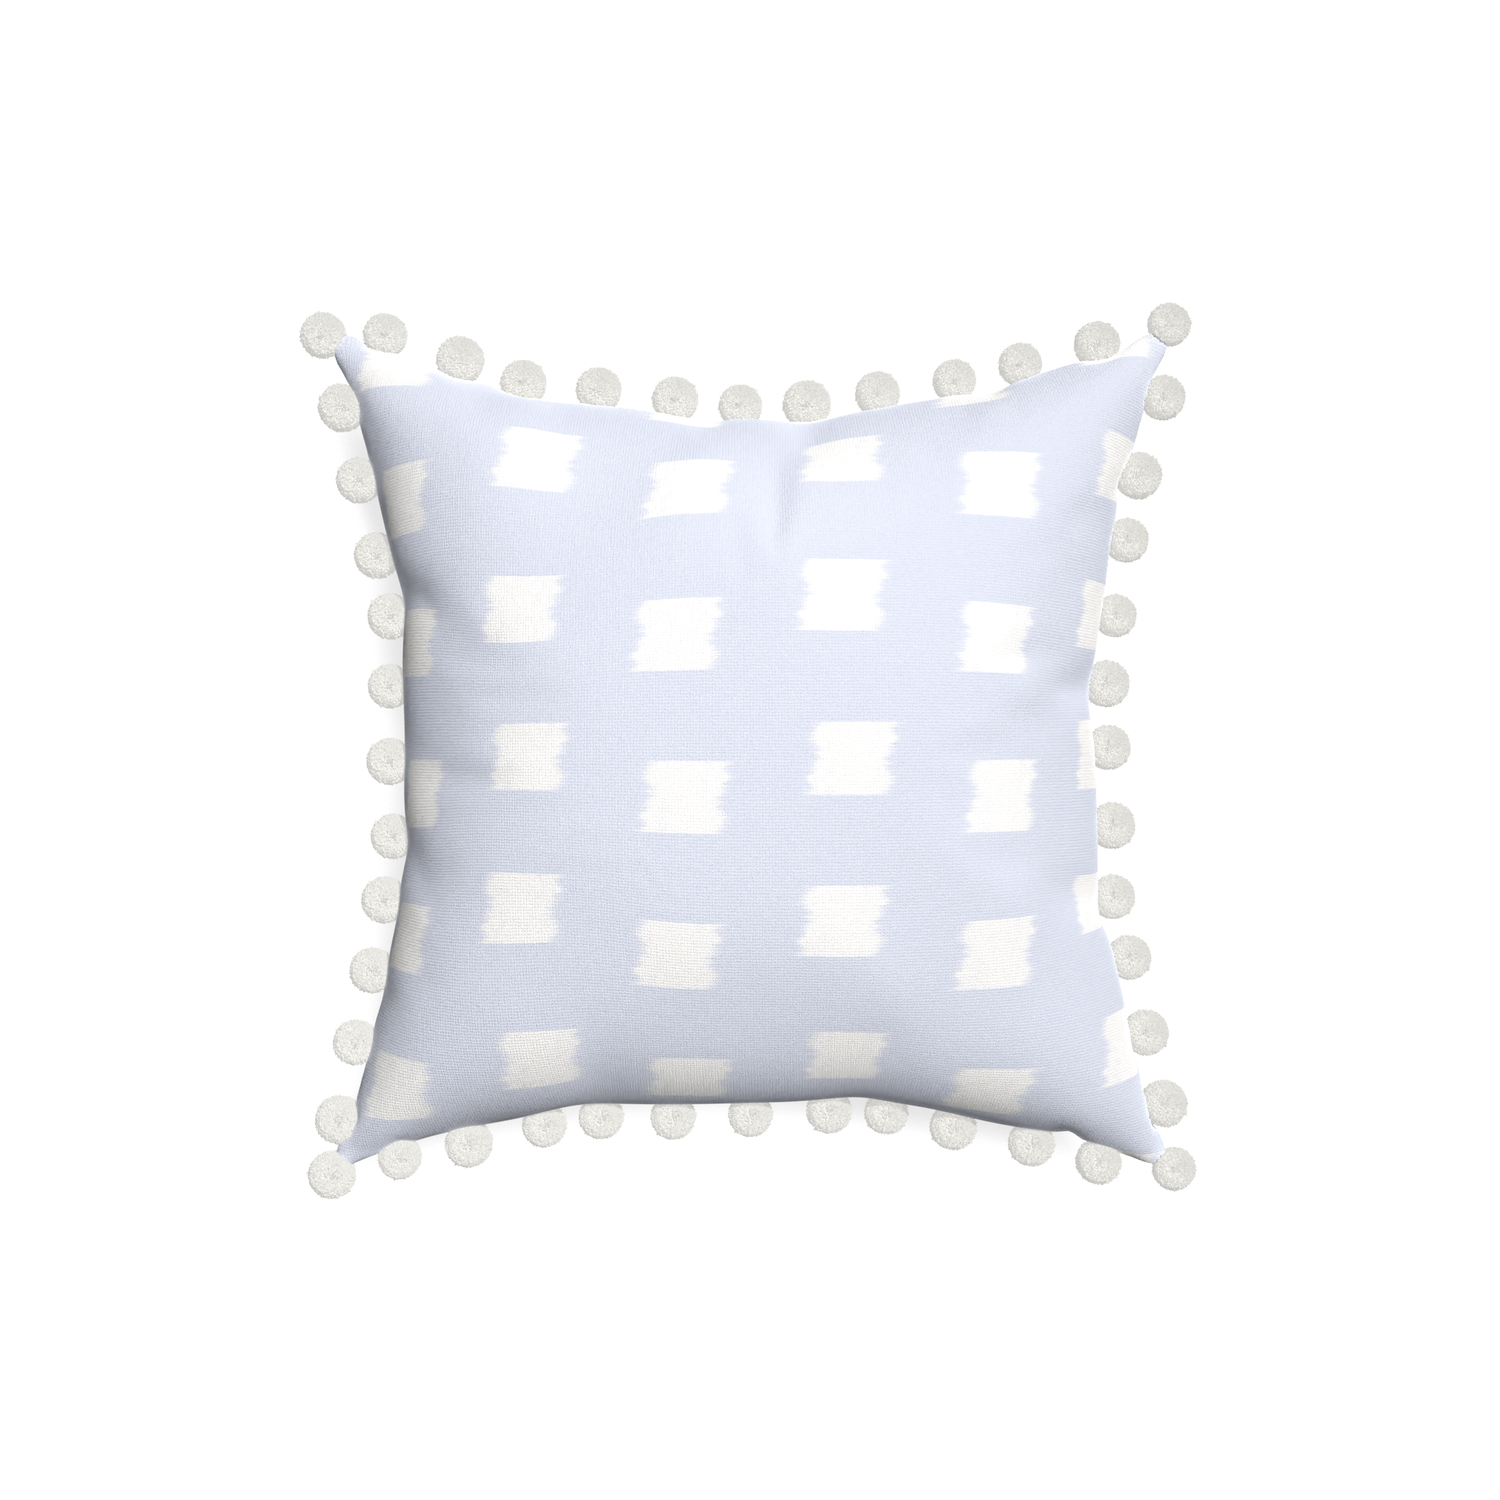 18-square denton custom pillow with snow pom pom on white background